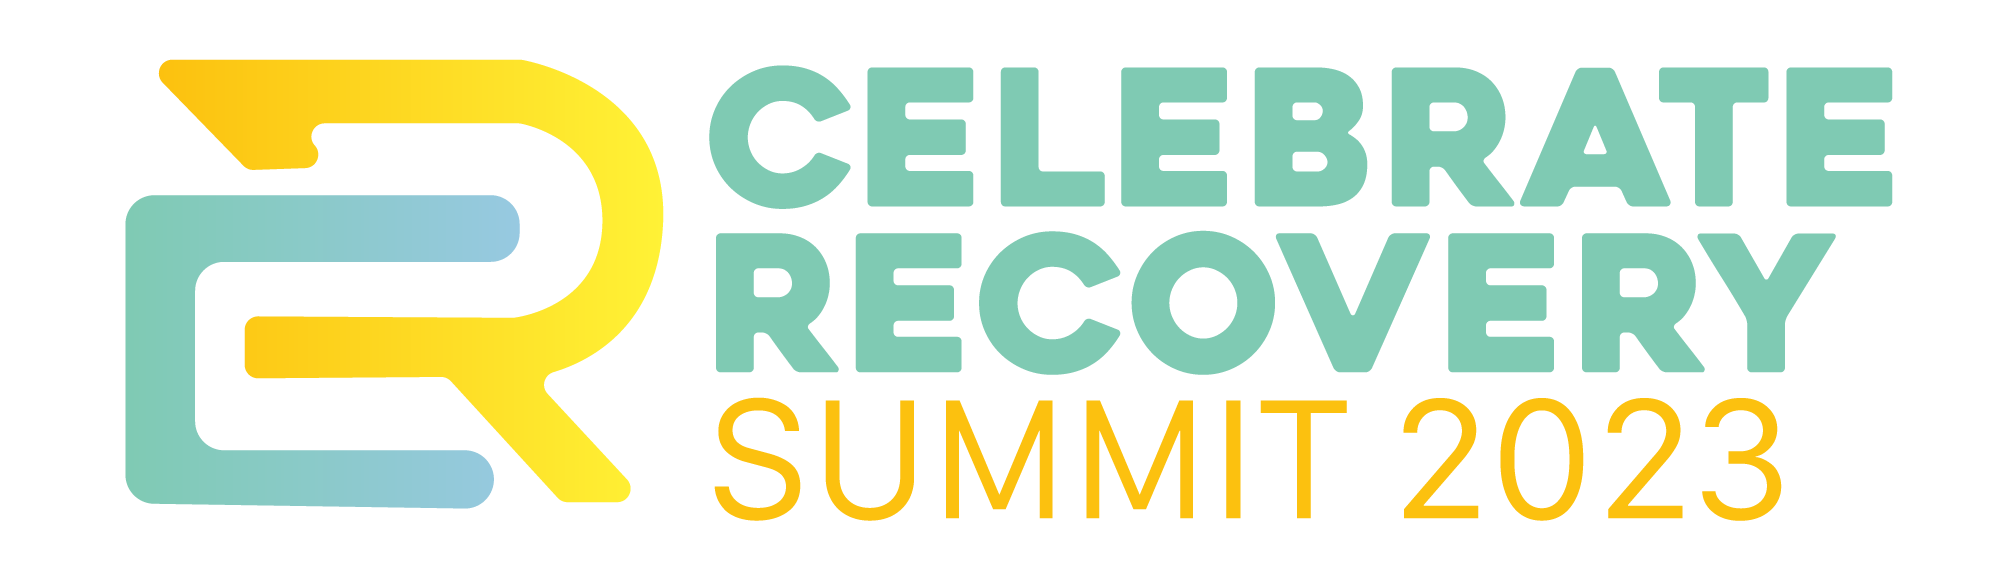 Celebrate Recovery Summit 2023